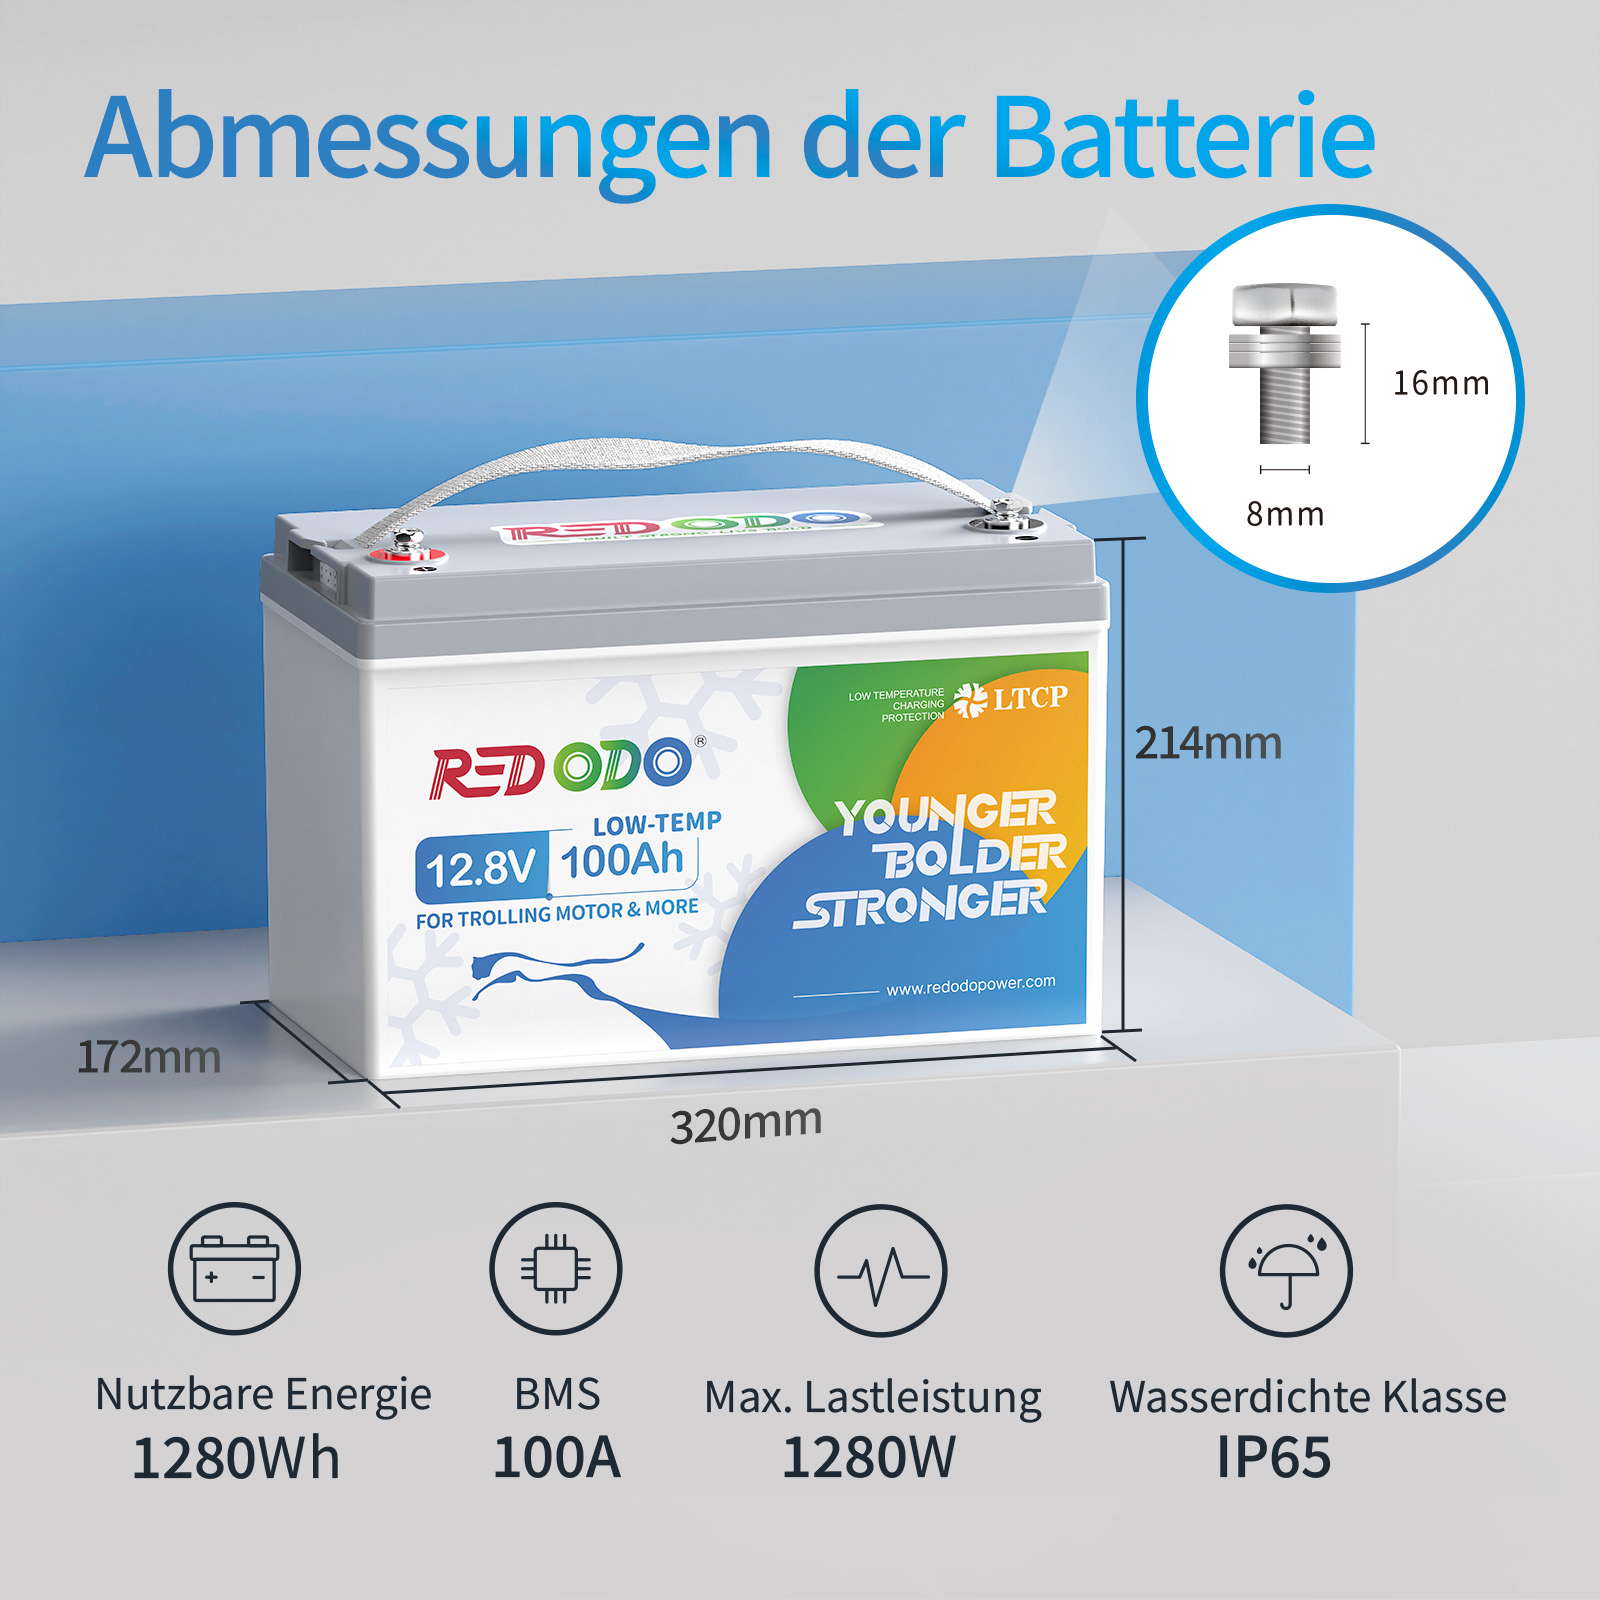 Redodo 100Ah LiFePO4 24V Lithium Batterie mit Max. 2560W Leistung